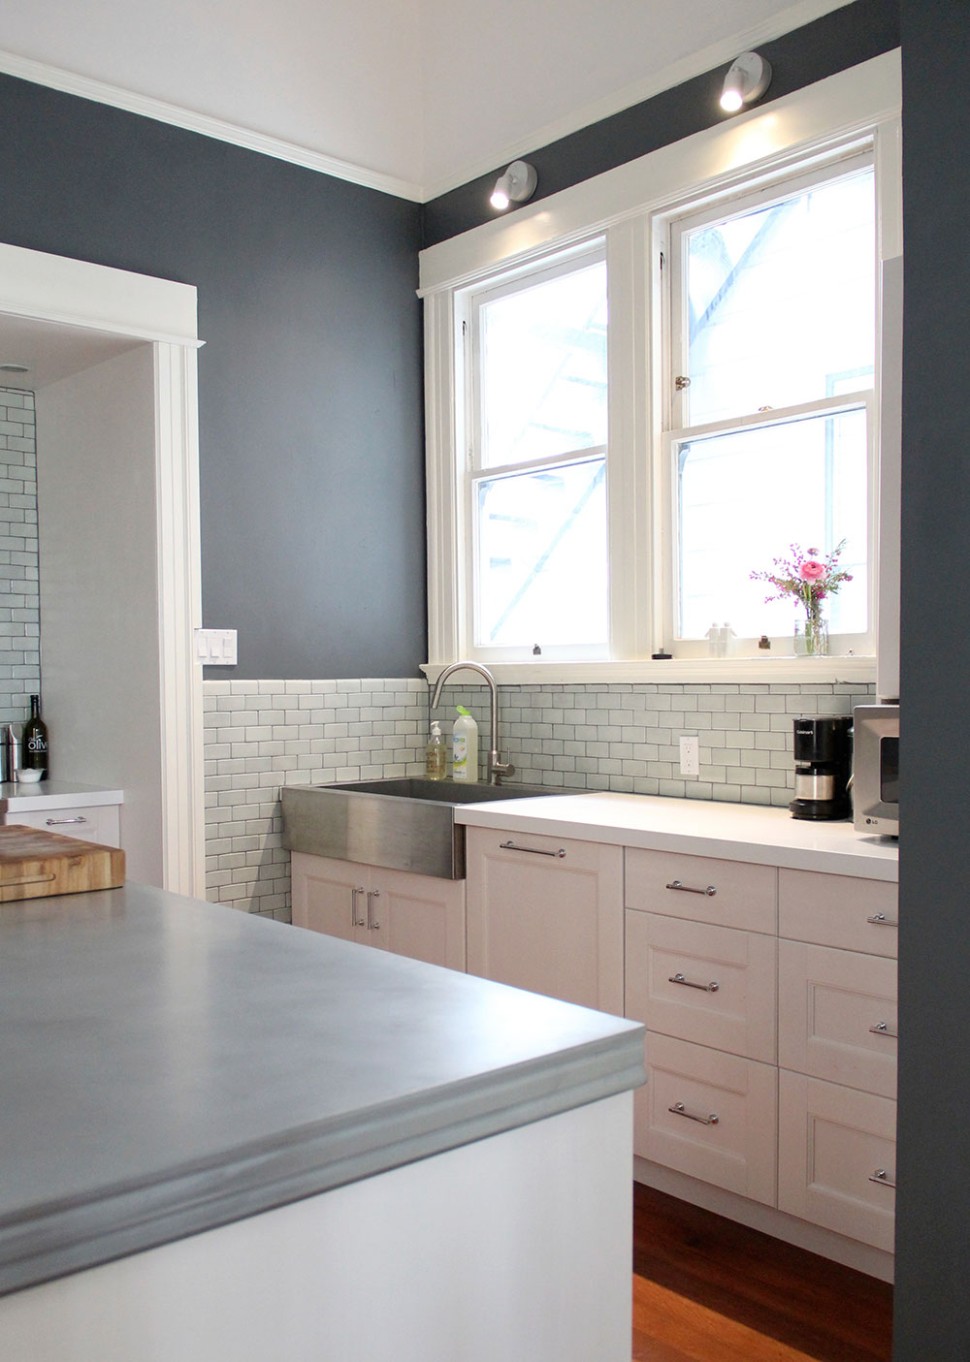 4 Gorgeous Gray Kitchen Ideas - How to Use Gray in Kitchens  - gray kitchen walls